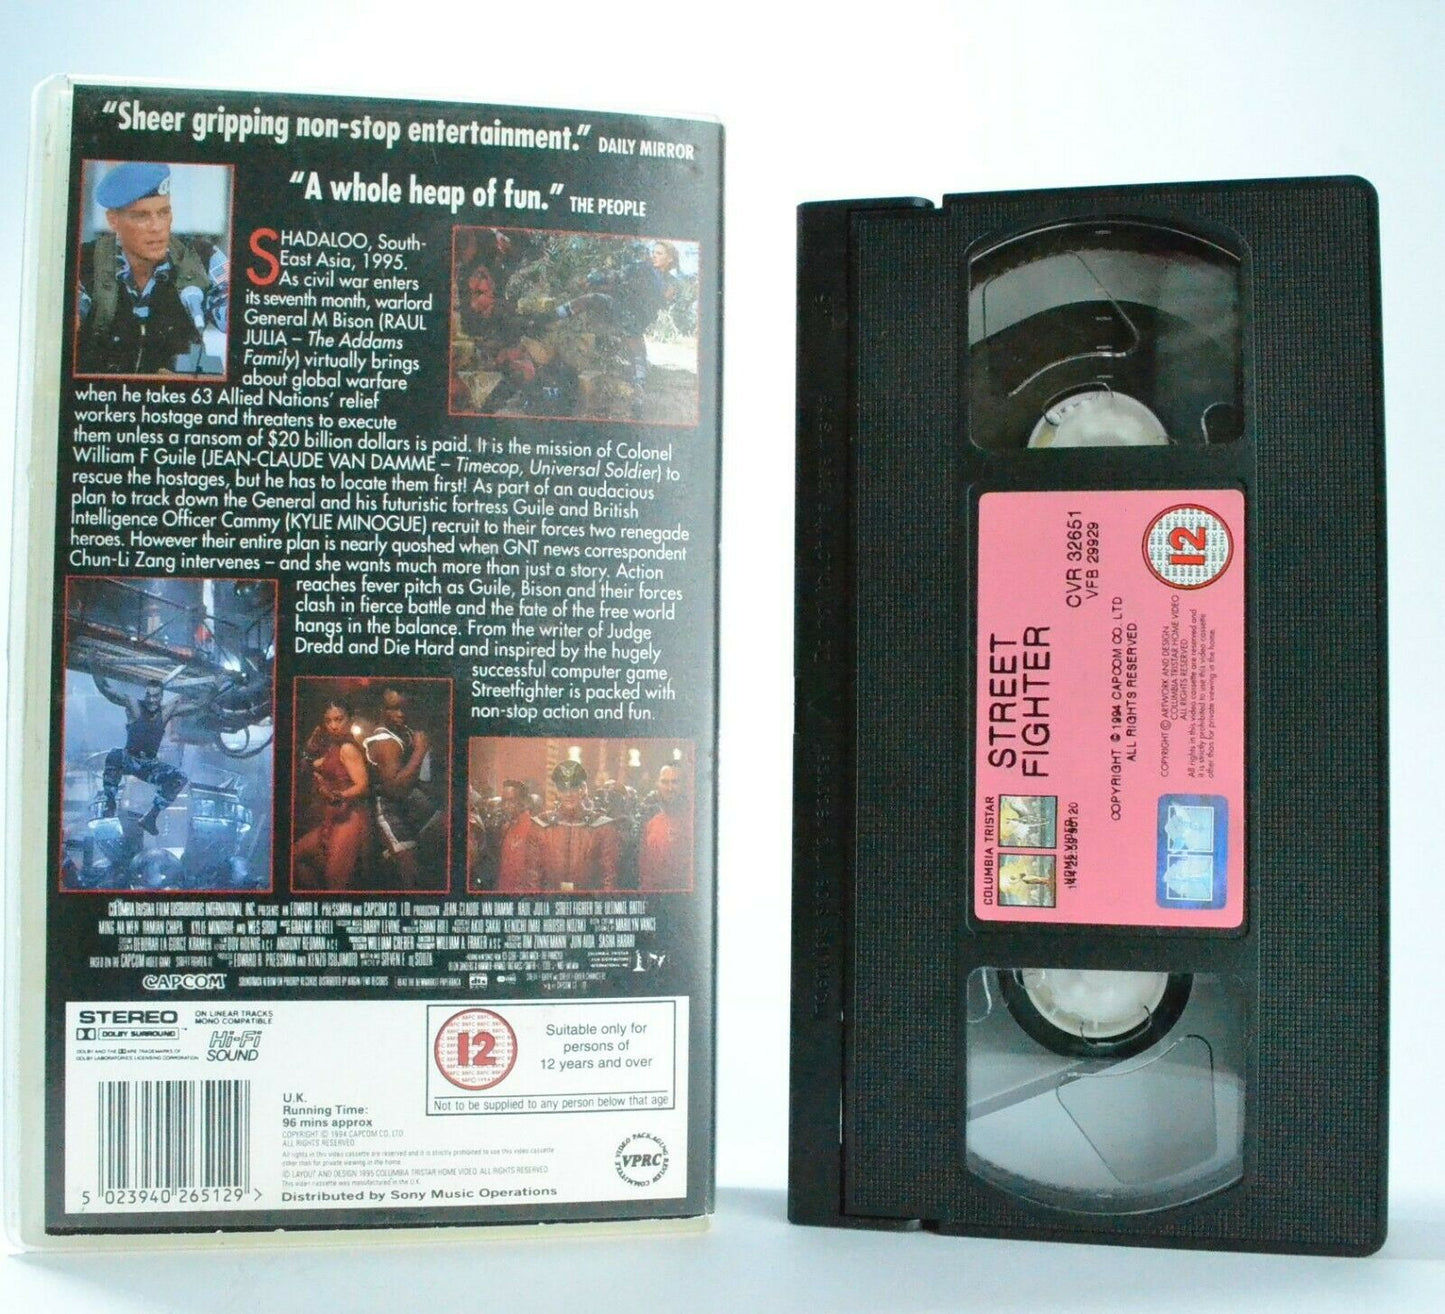 Street Fighter: The Ultimate Battle - Action (1994) - Van Damme/R.Julia - VHS-